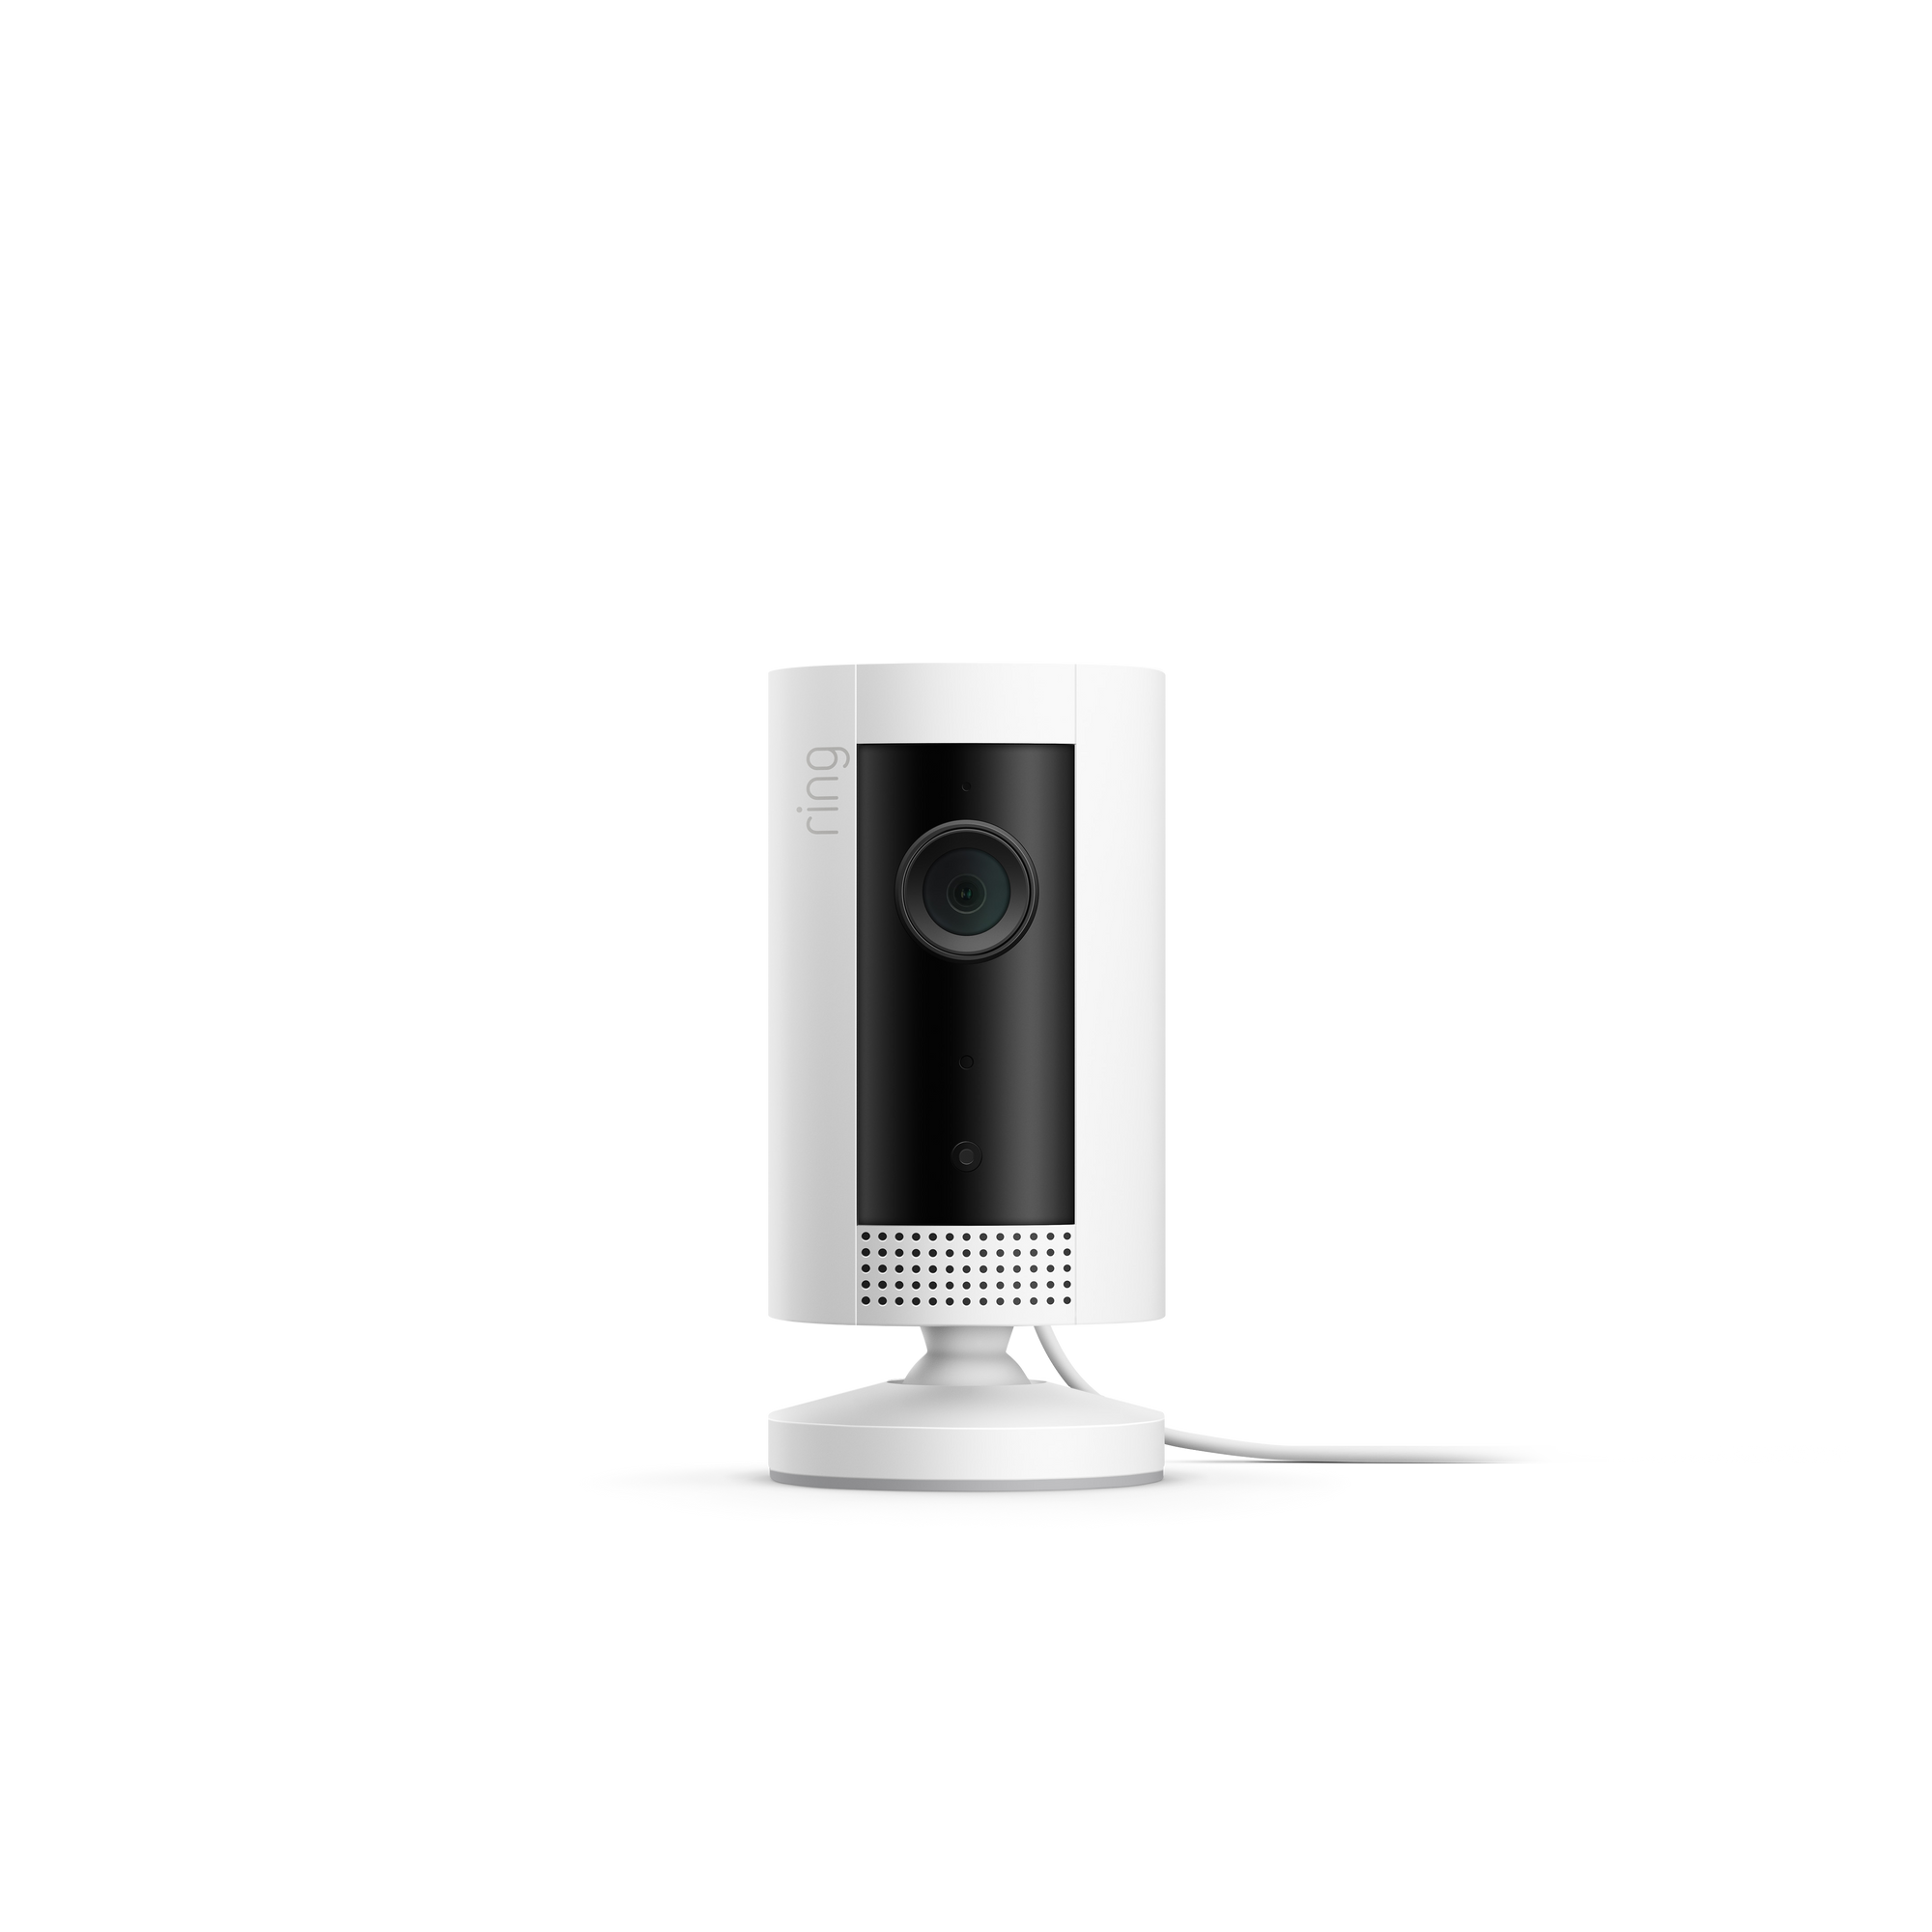 ring doorbell indoor camera